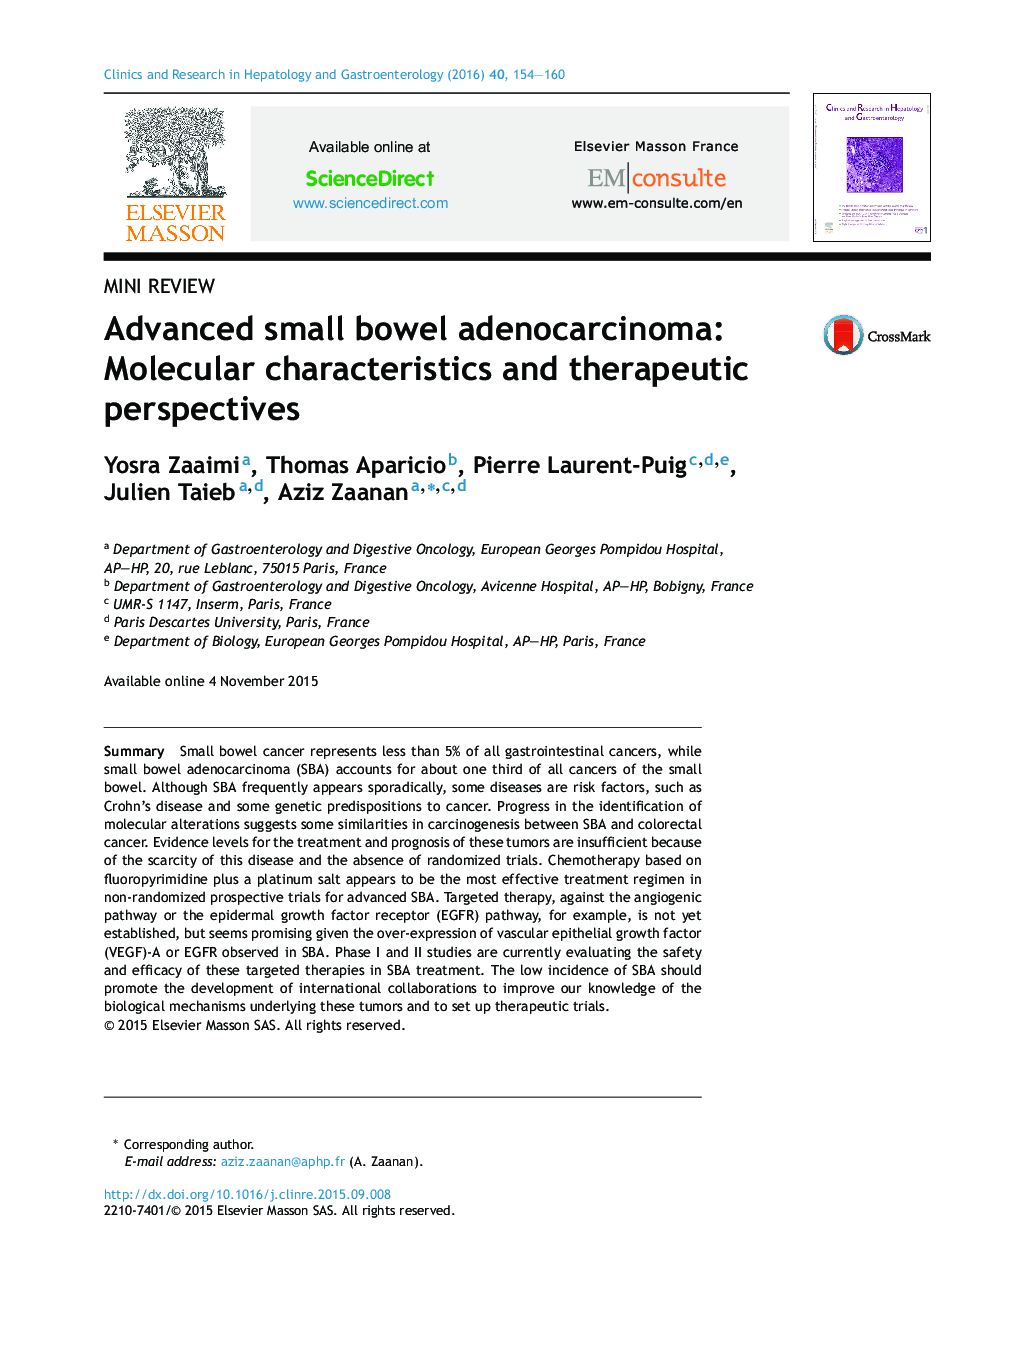 Advanced small bowel adenocarcinoma: Molecular characteristics and therapeutic perspectives